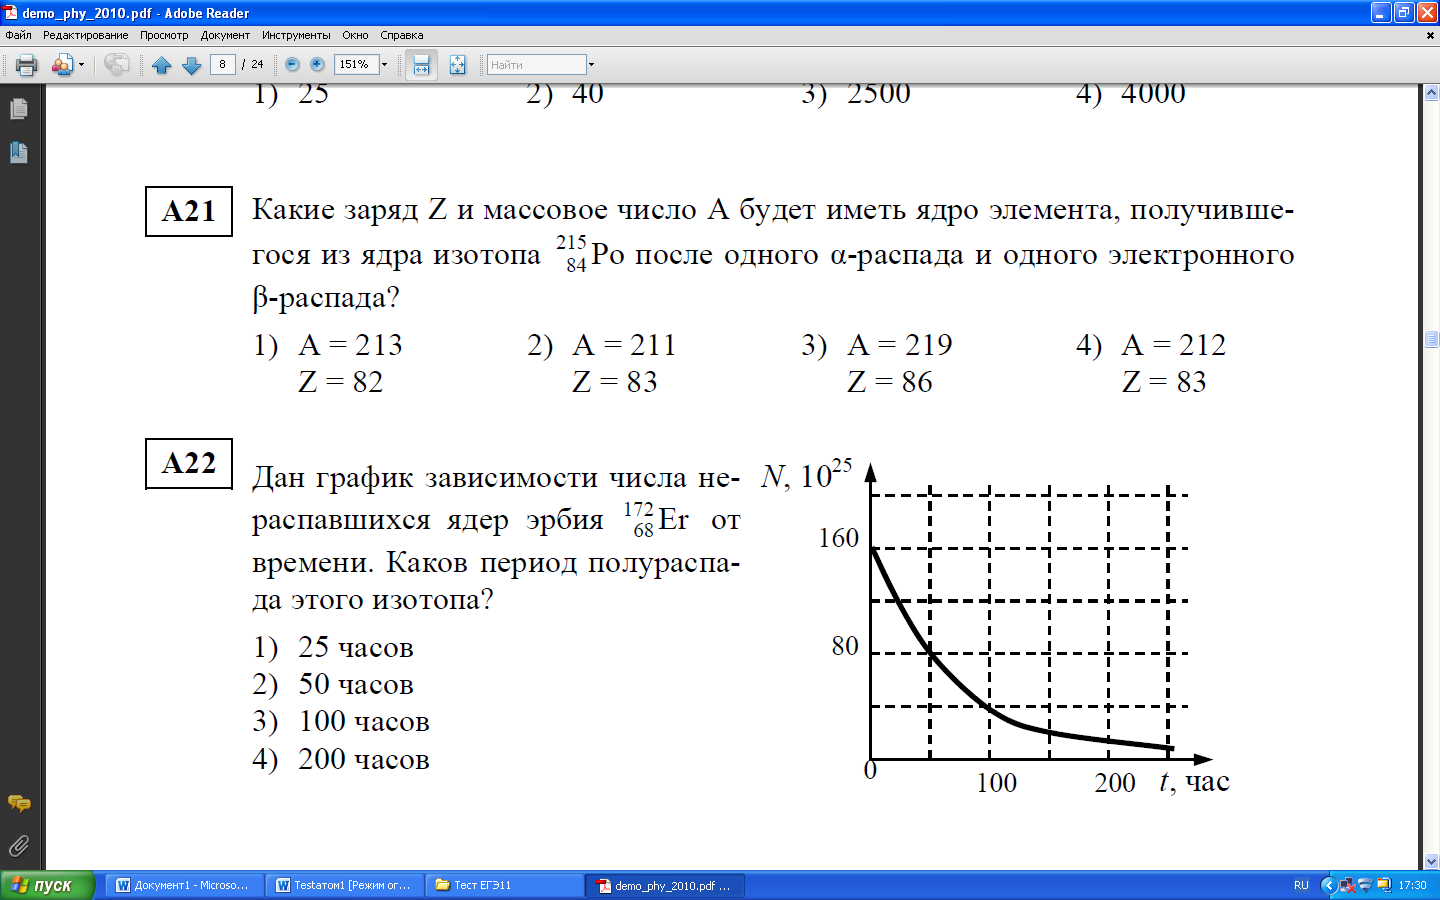 V1: Раздел 7. Физика атомного ядра и элементарных частиц - student2.ru